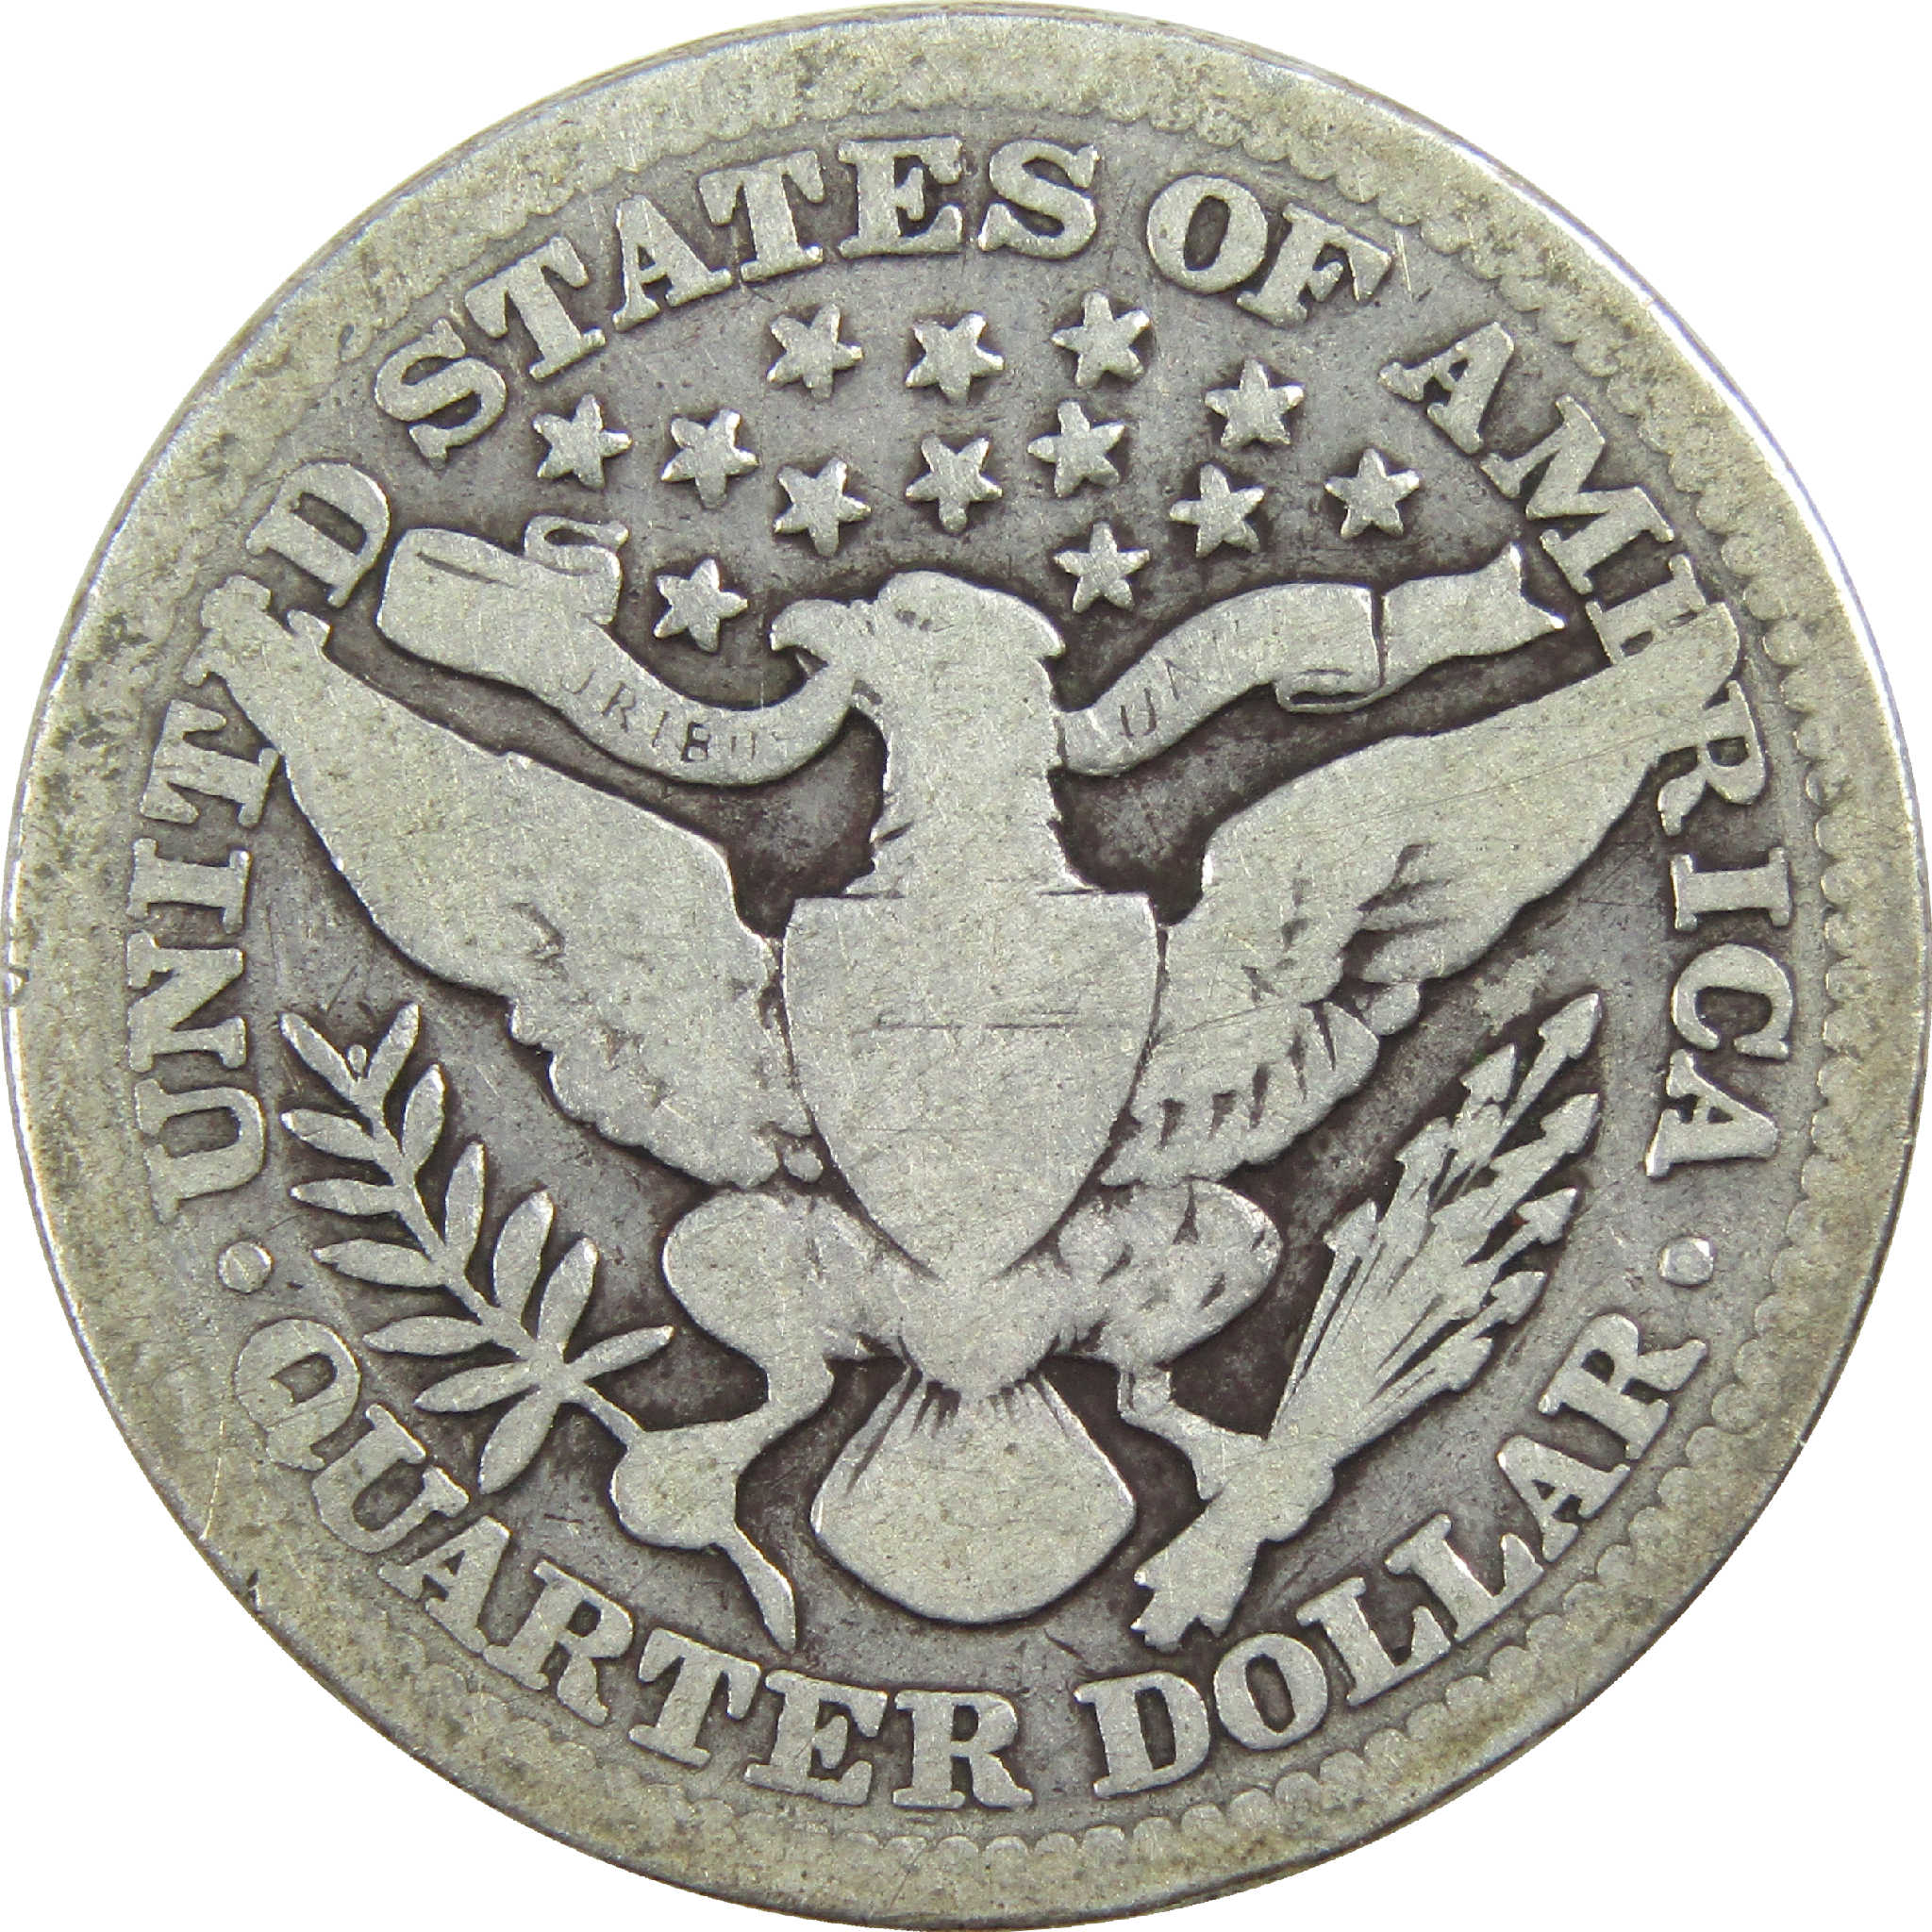 1904 Barber Quarter G Good Silver 25c Coin SKU:I13146